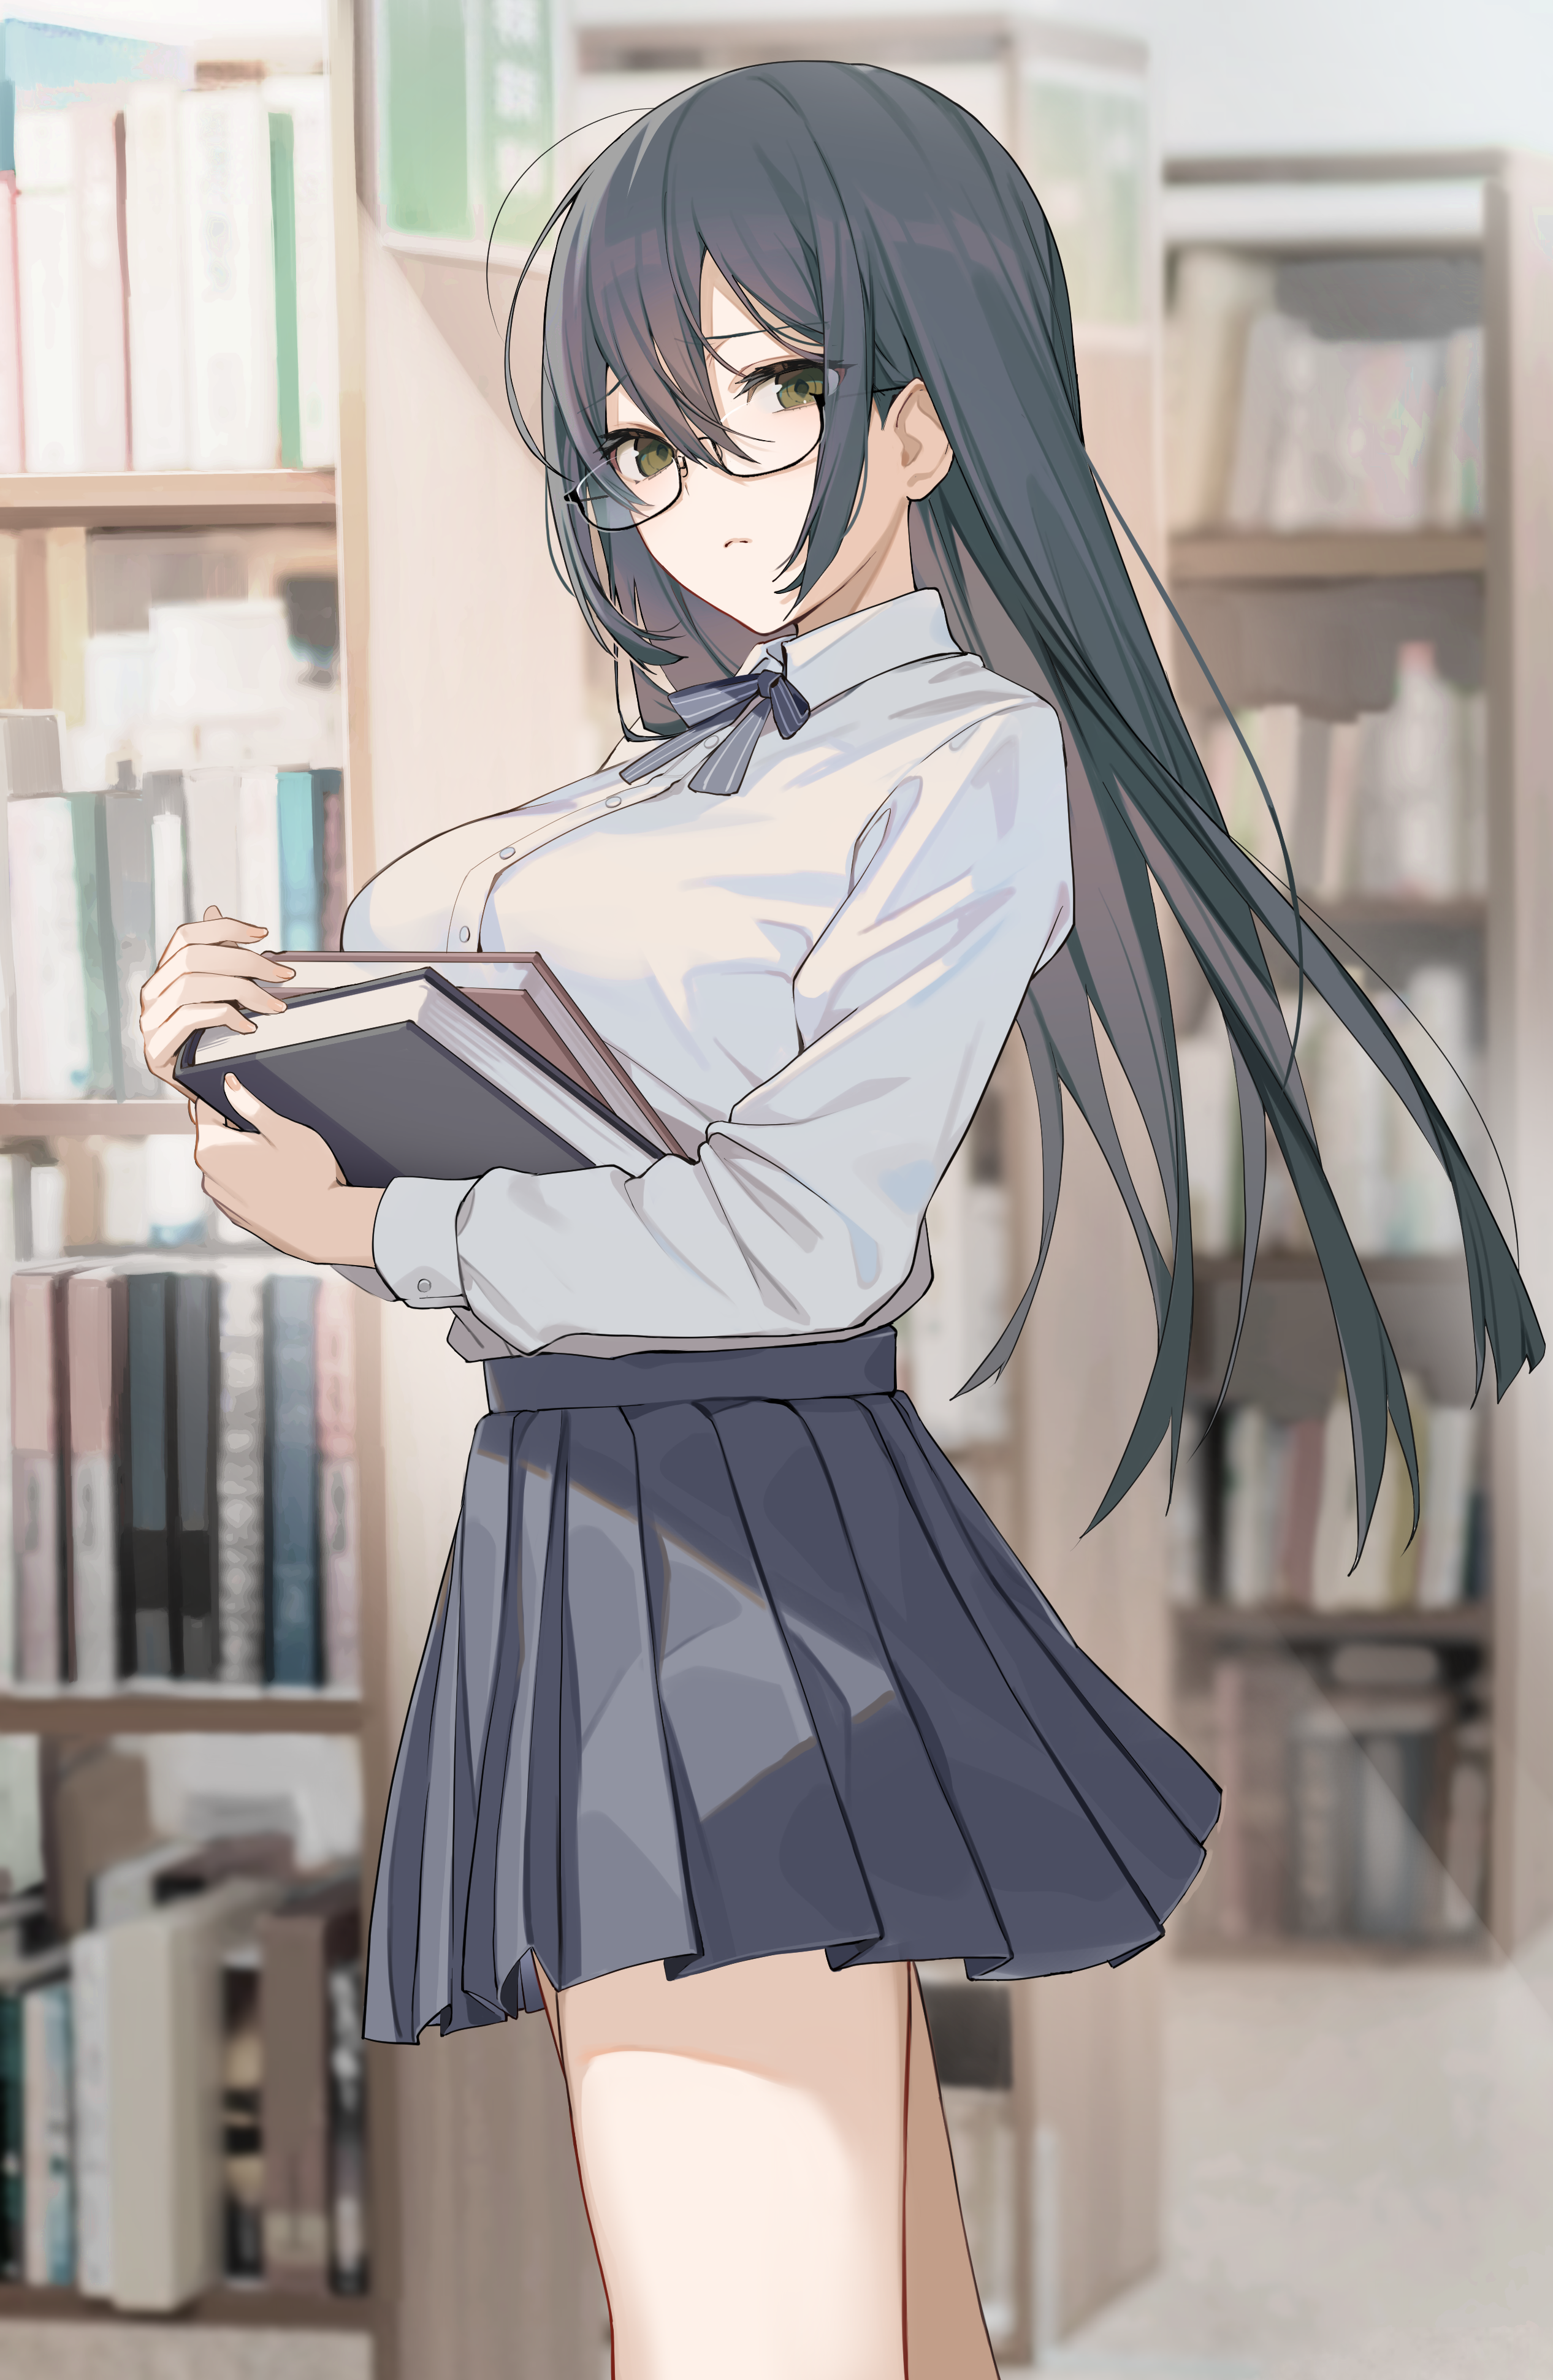 Anime Girls Icomochi Library School Uniform Vertical Schoolgirl Glasses Skirt Books Bow Tie Long Hai 2533x3883